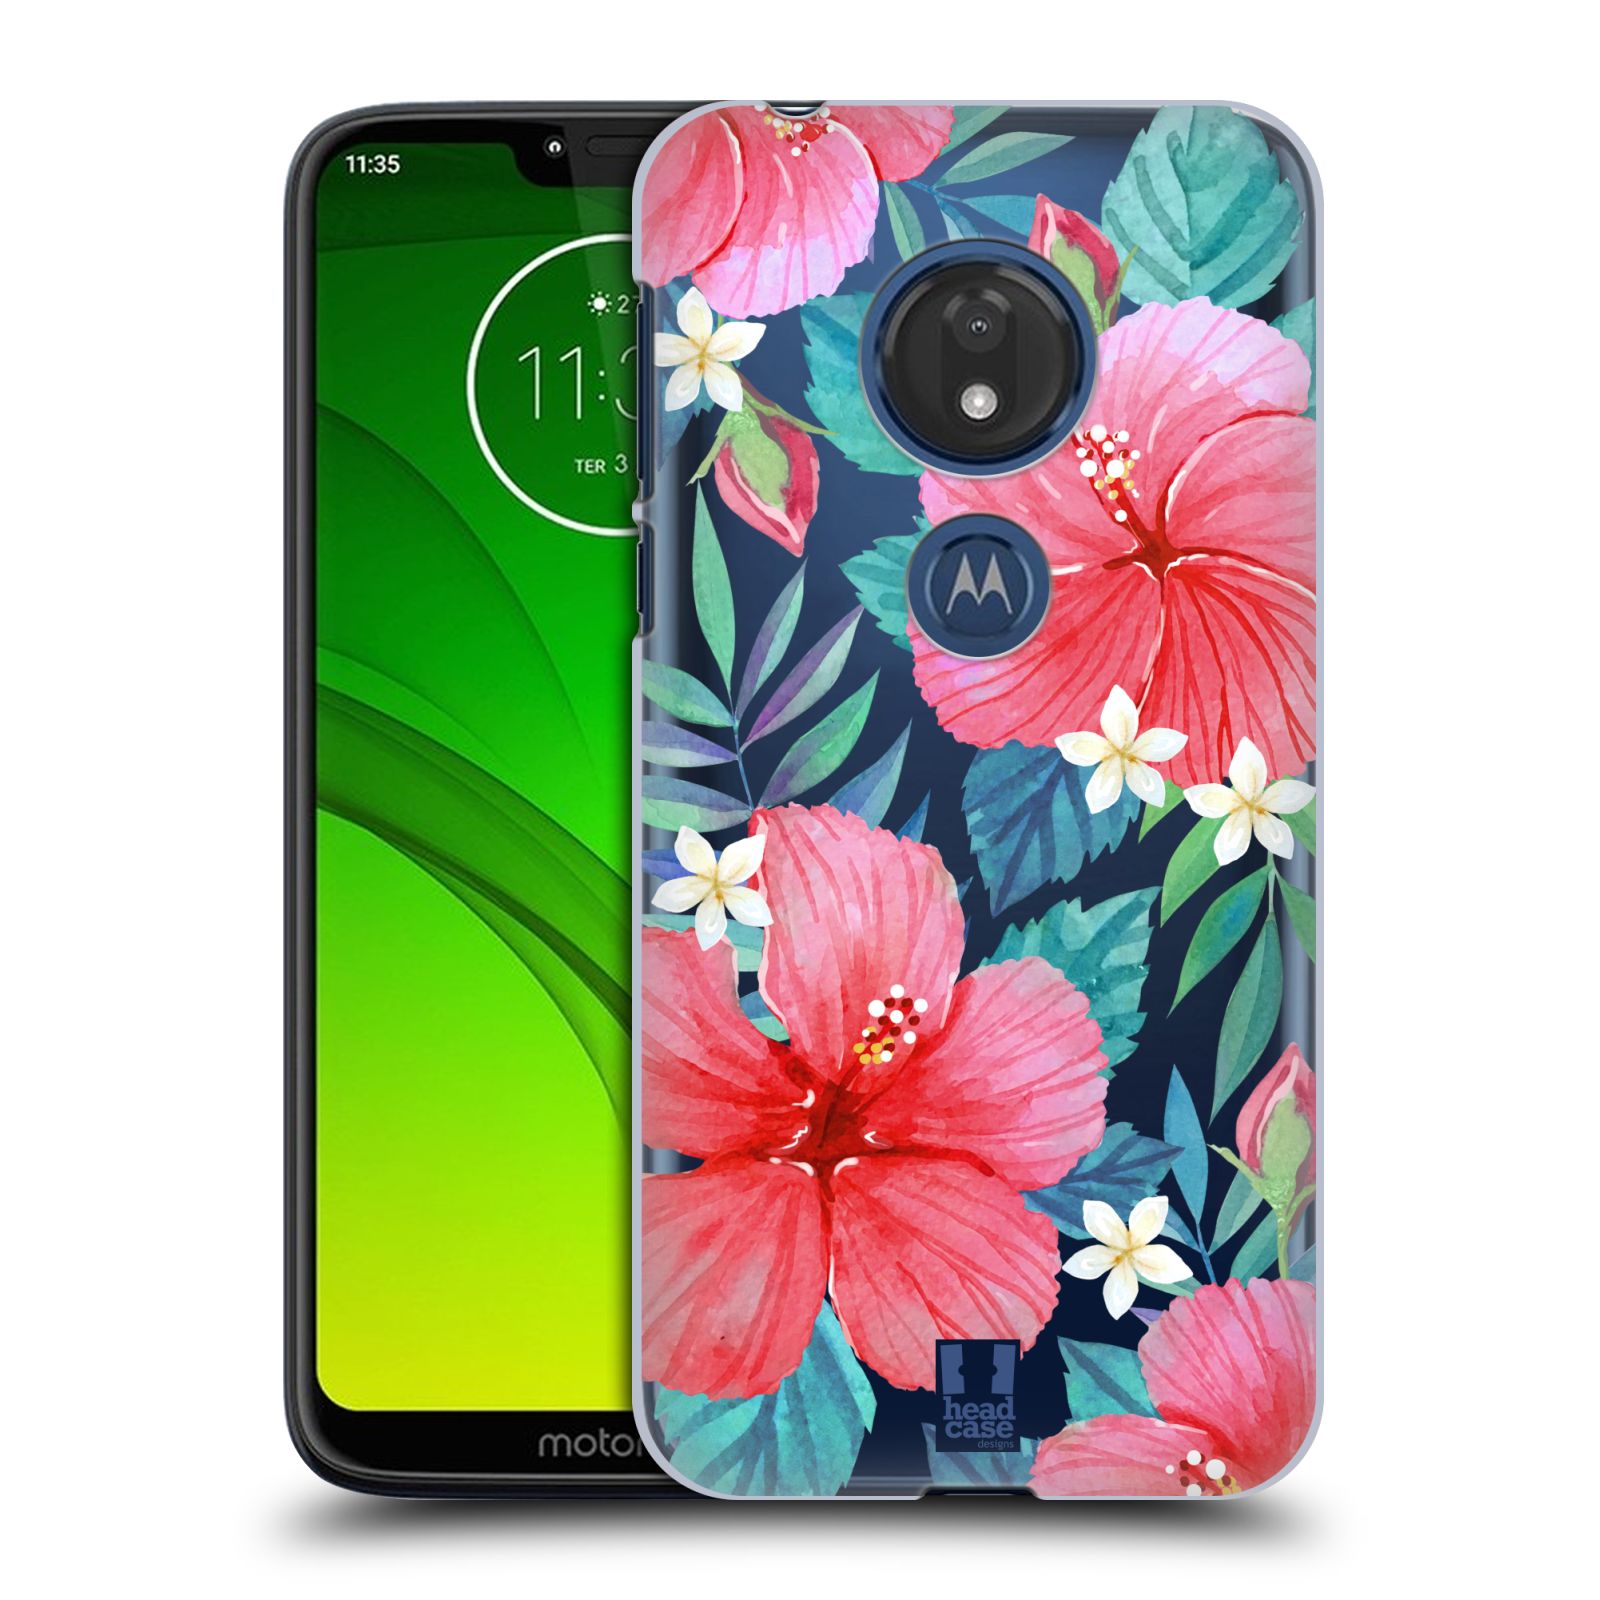 Pouzdro na mobil Motorola Moto G7 Play květinové vzory Ibišek čínská růže